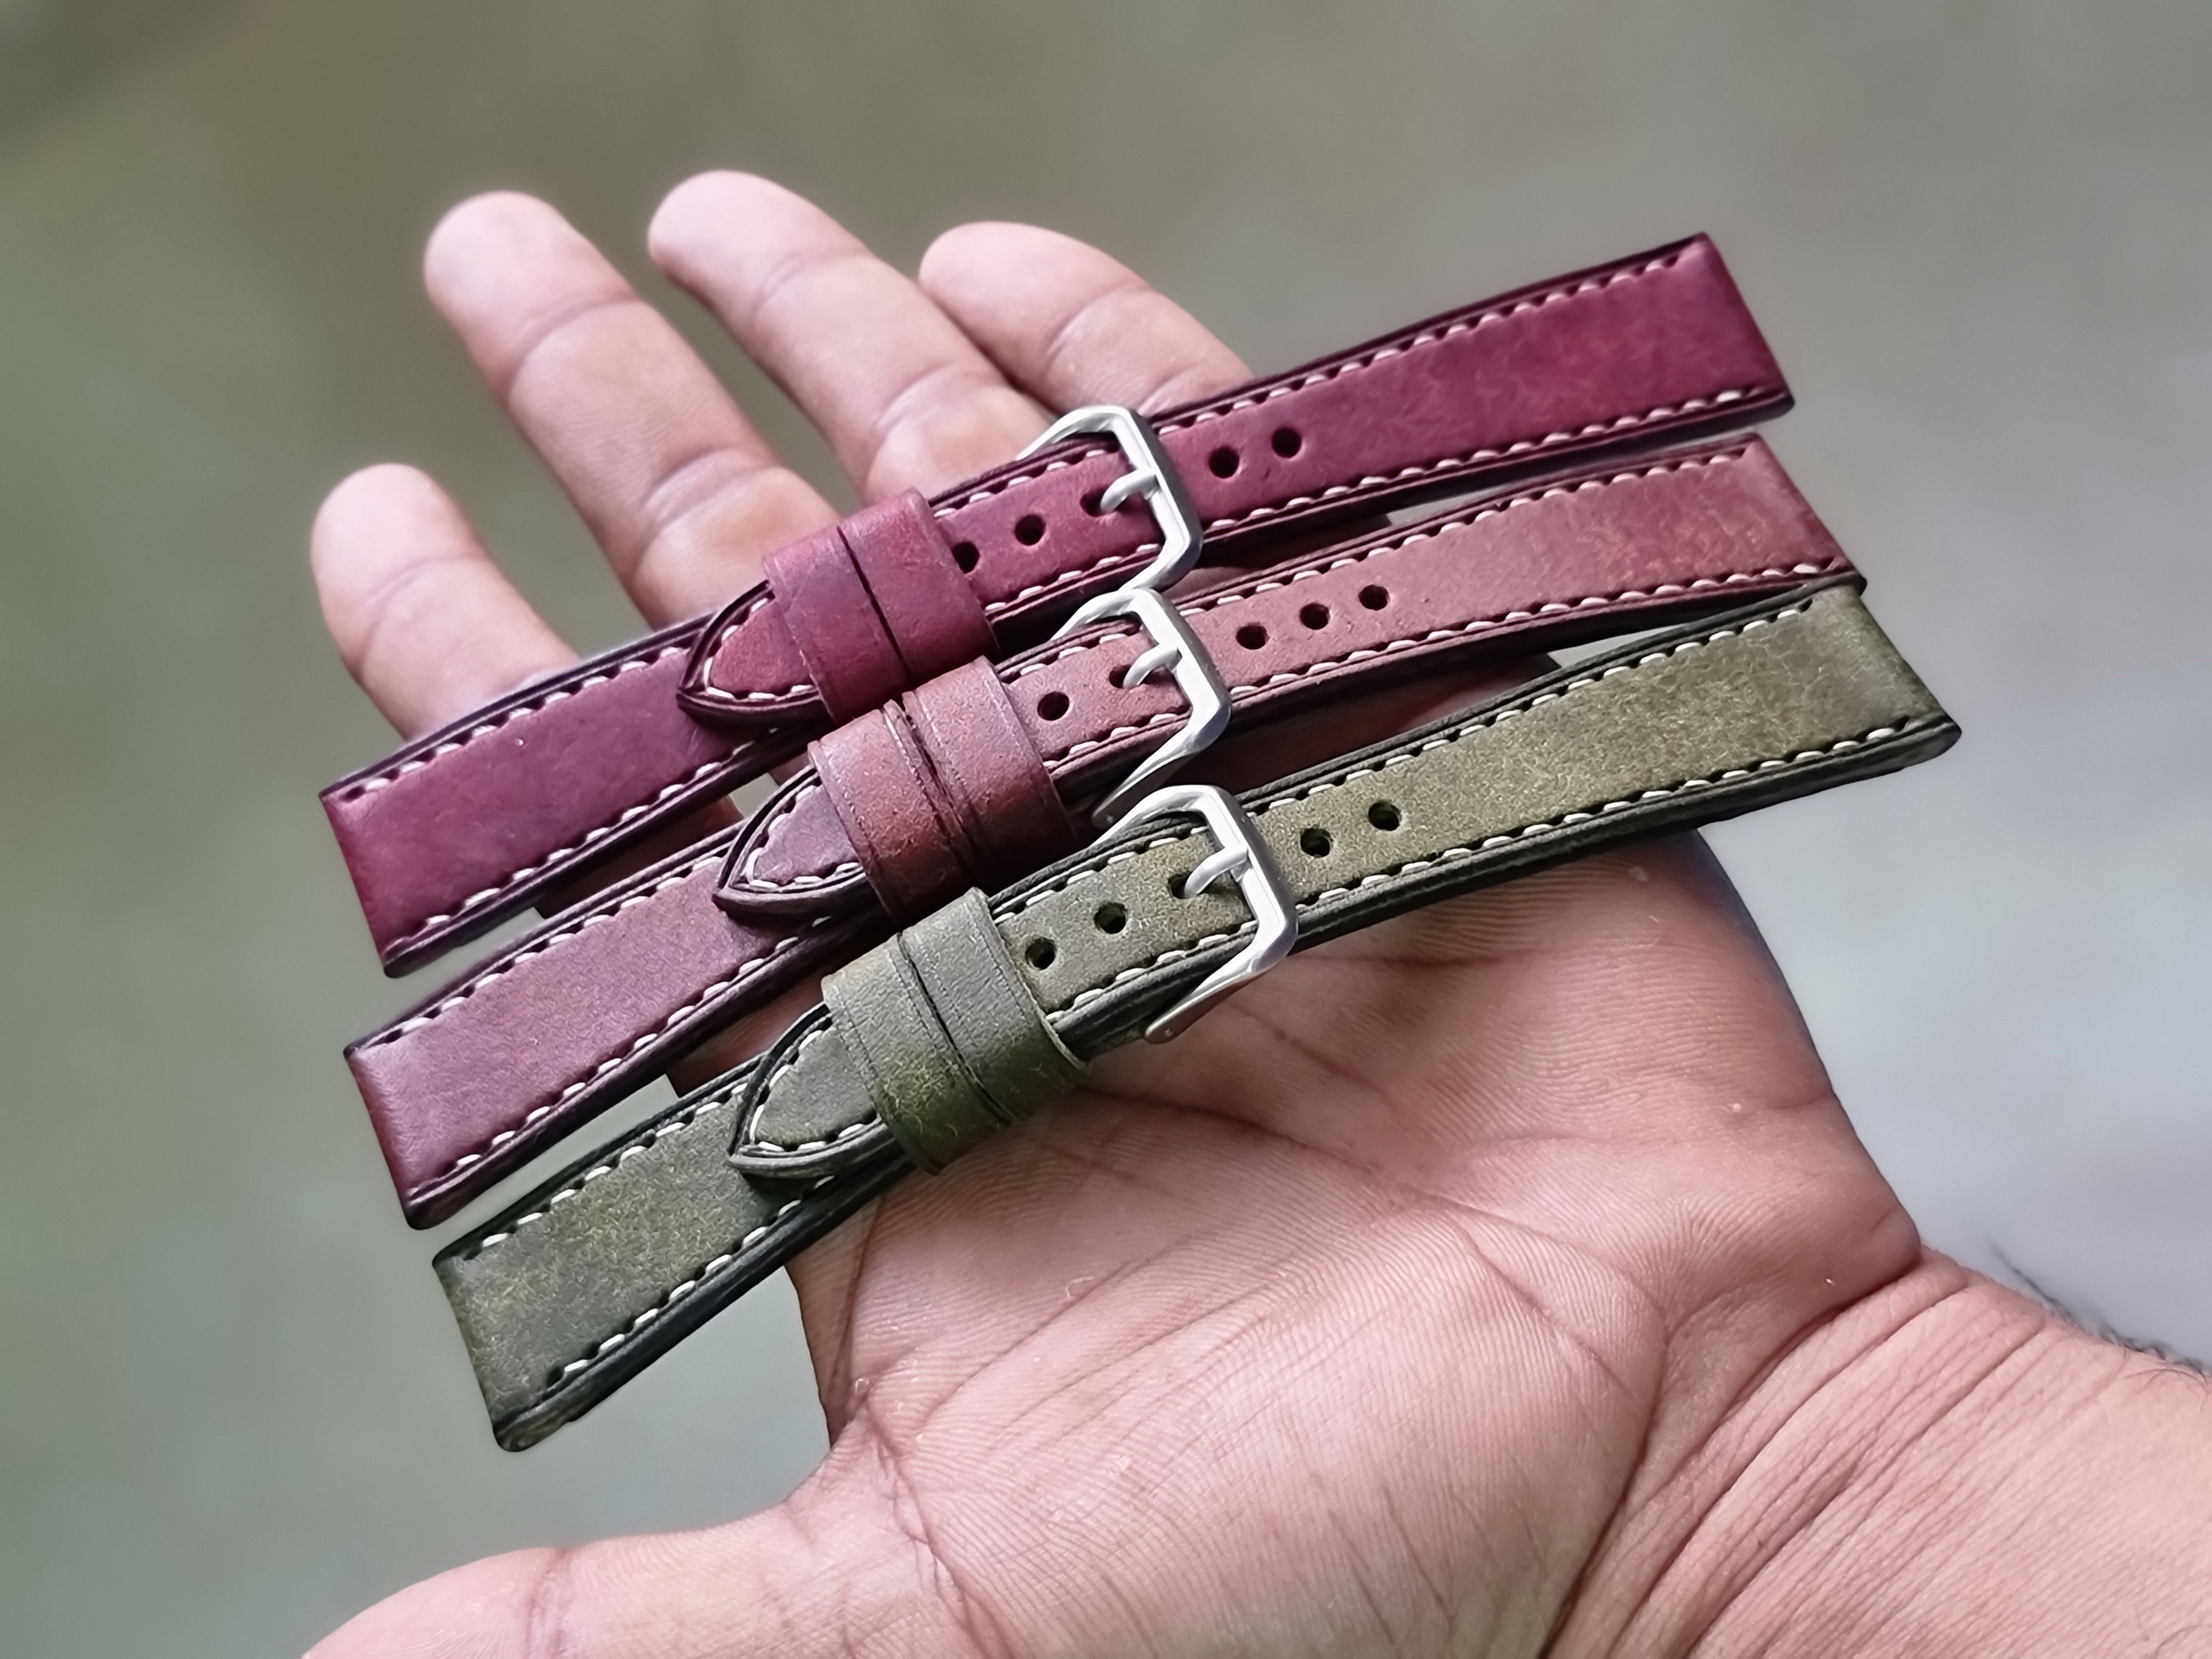 Balabanoff Black Epsom Leather Watch Strap Band / 100% Handmade from Premium Italian Leather / 24 mm, 22 mm, 20 mm, 18 mm Custom Sized